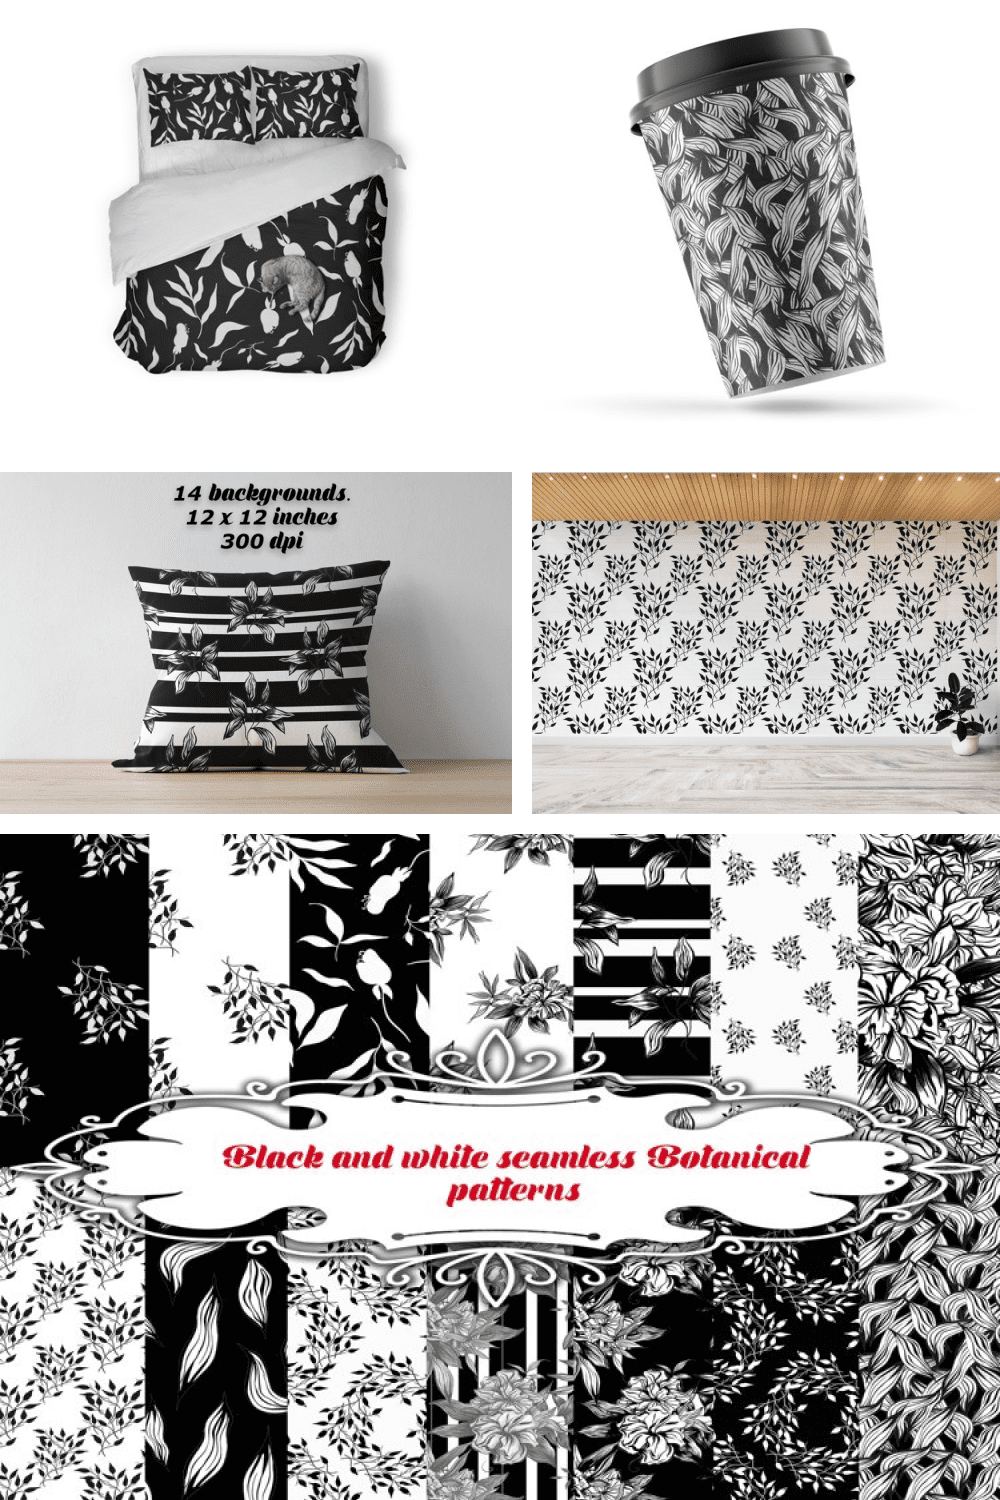 Black and white seamless botanical patterns.